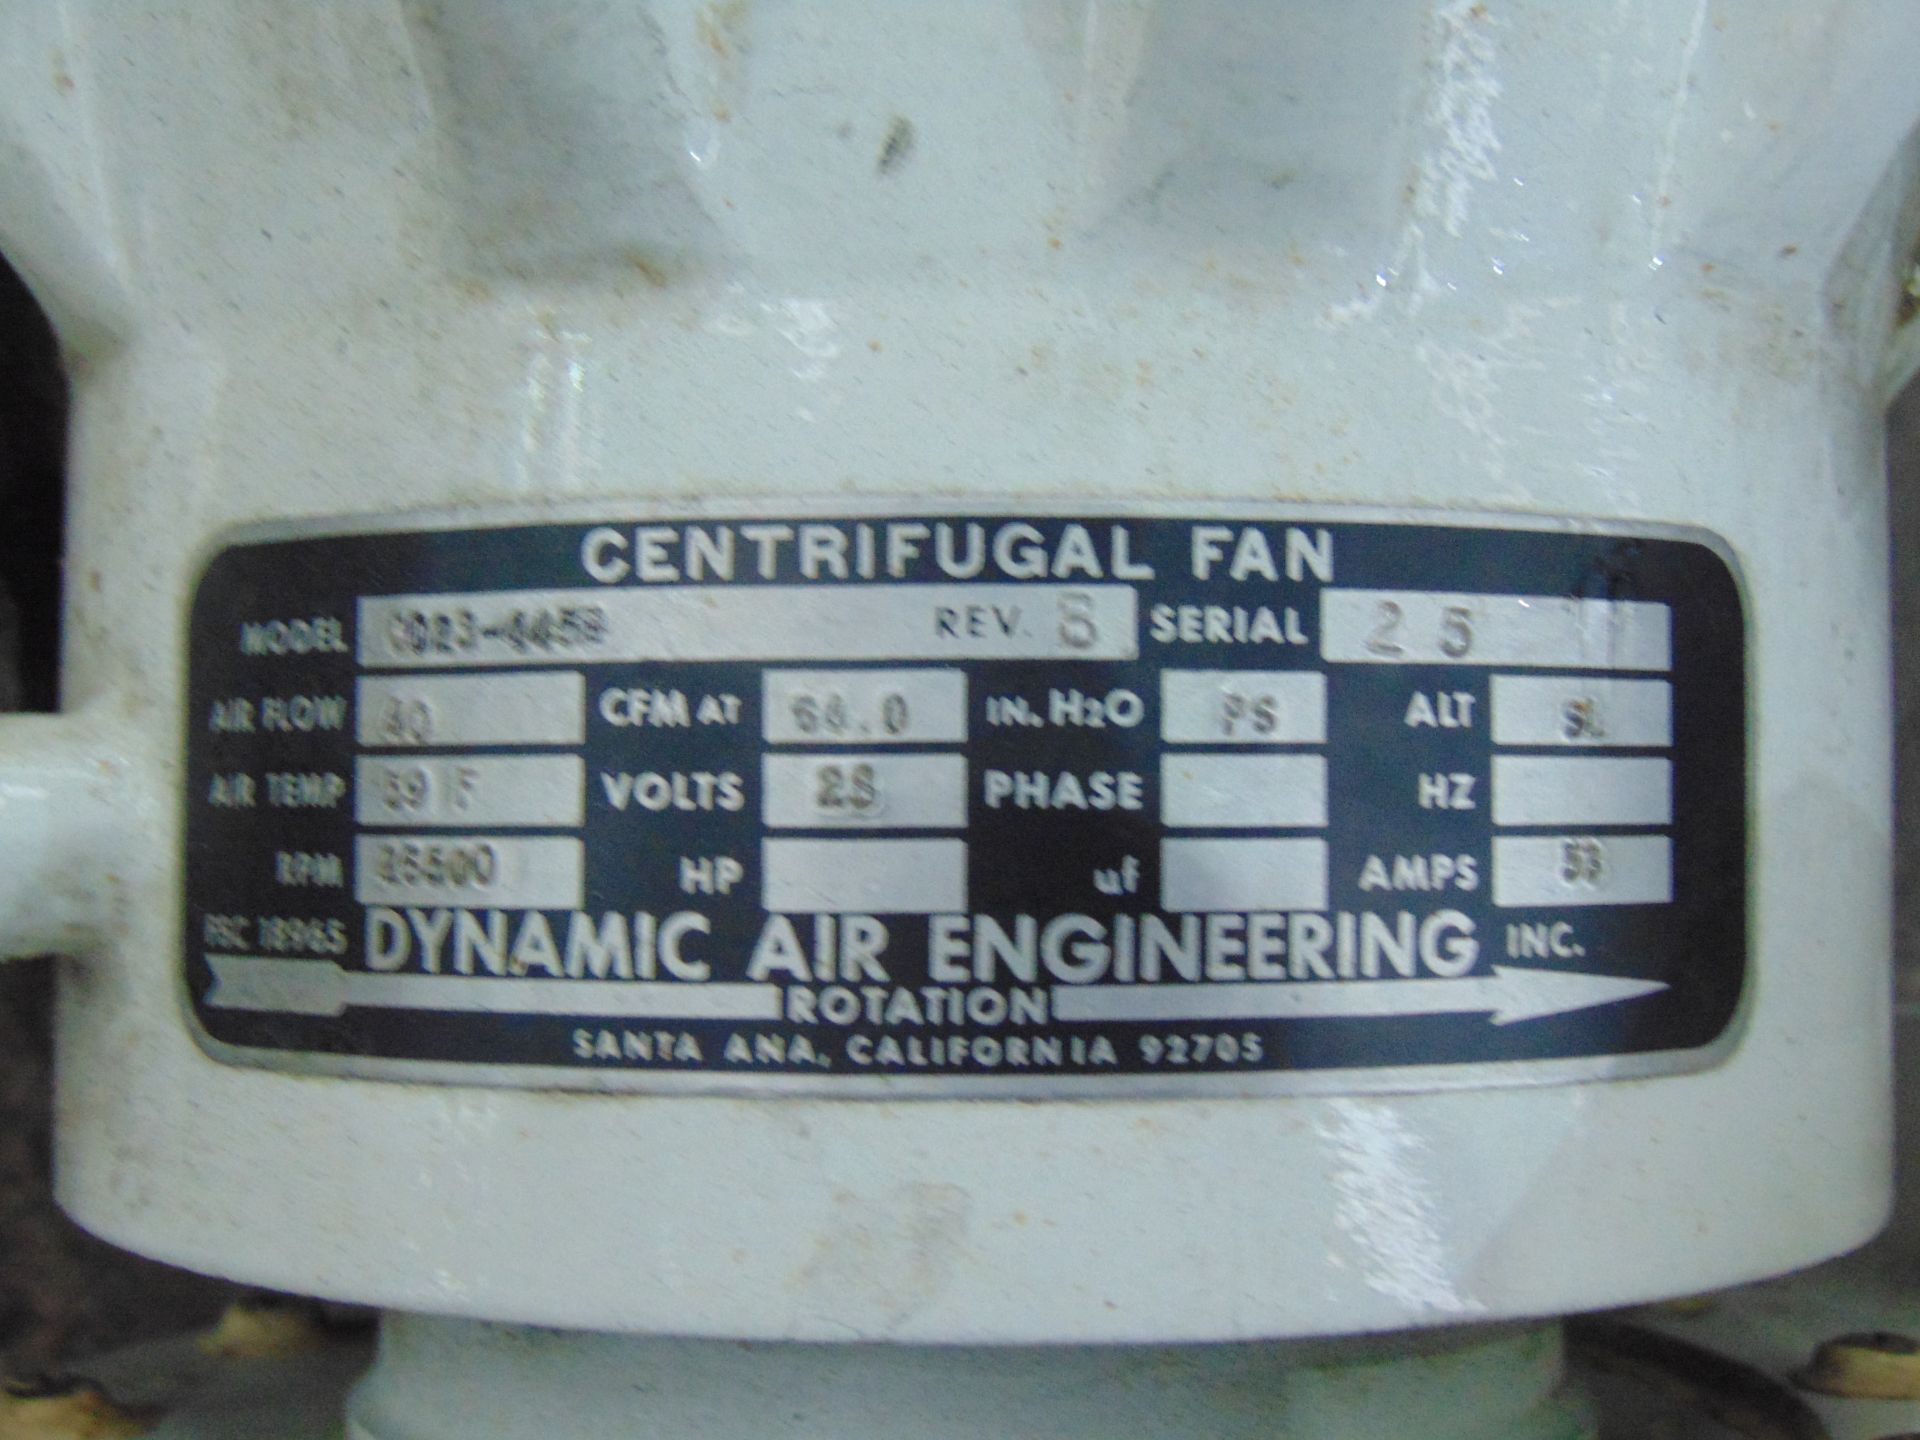 2 x Dynamic Air Engineering Centrifugal Fan Assemblies Model No CO23-445B - Image 6 of 16